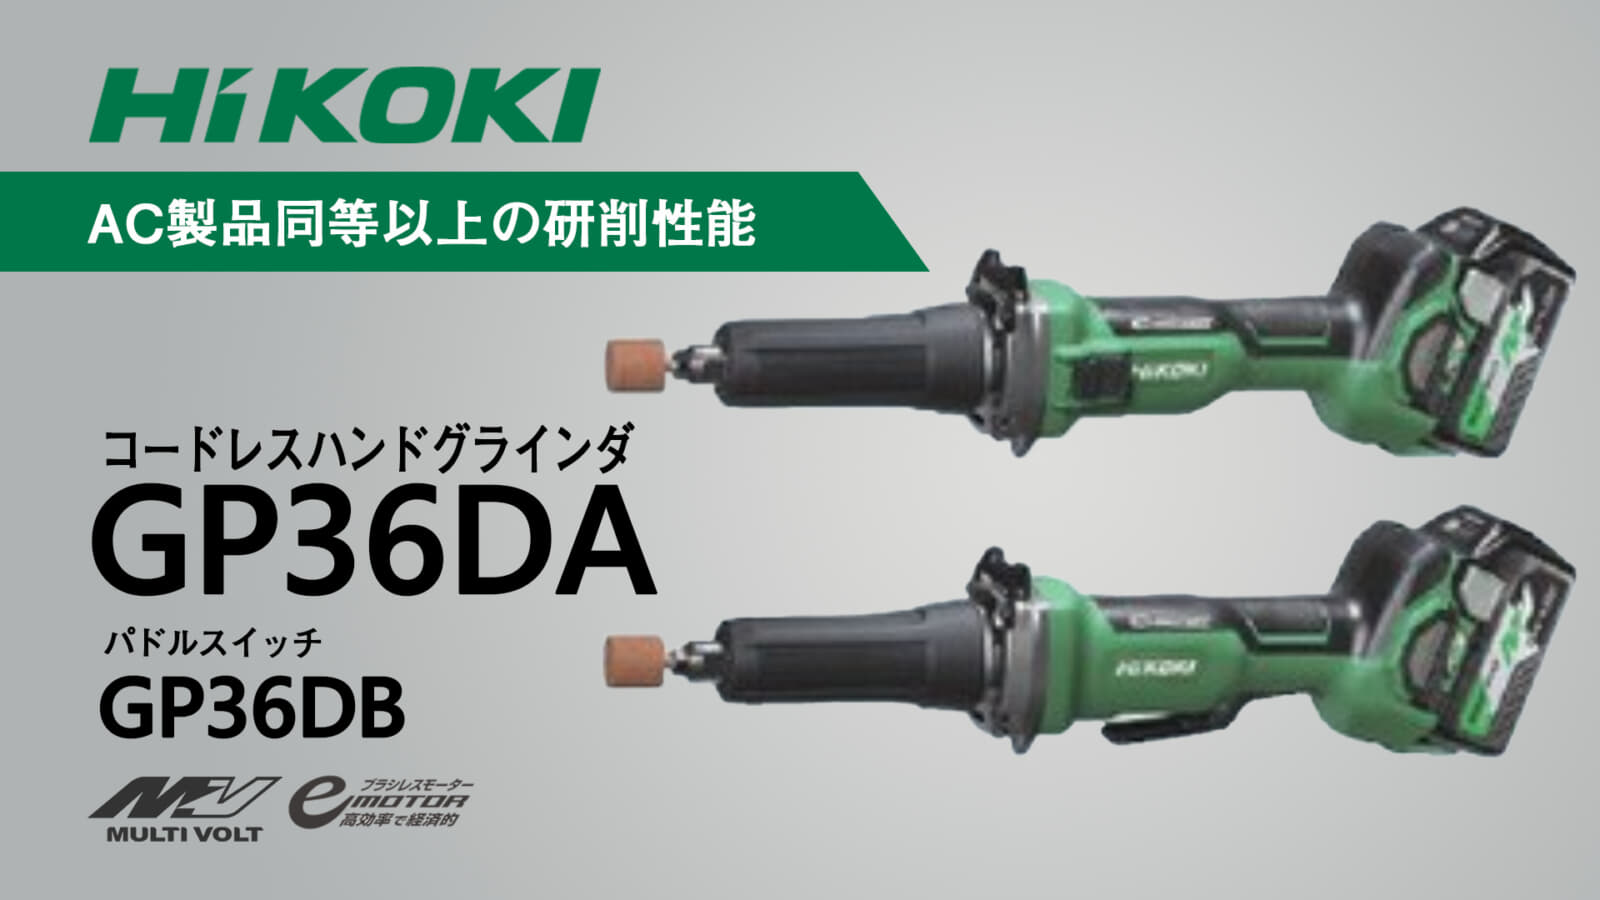 HiKOKI GP36DA 36Vコードレスハンドグラインダを発売、電源コード式を